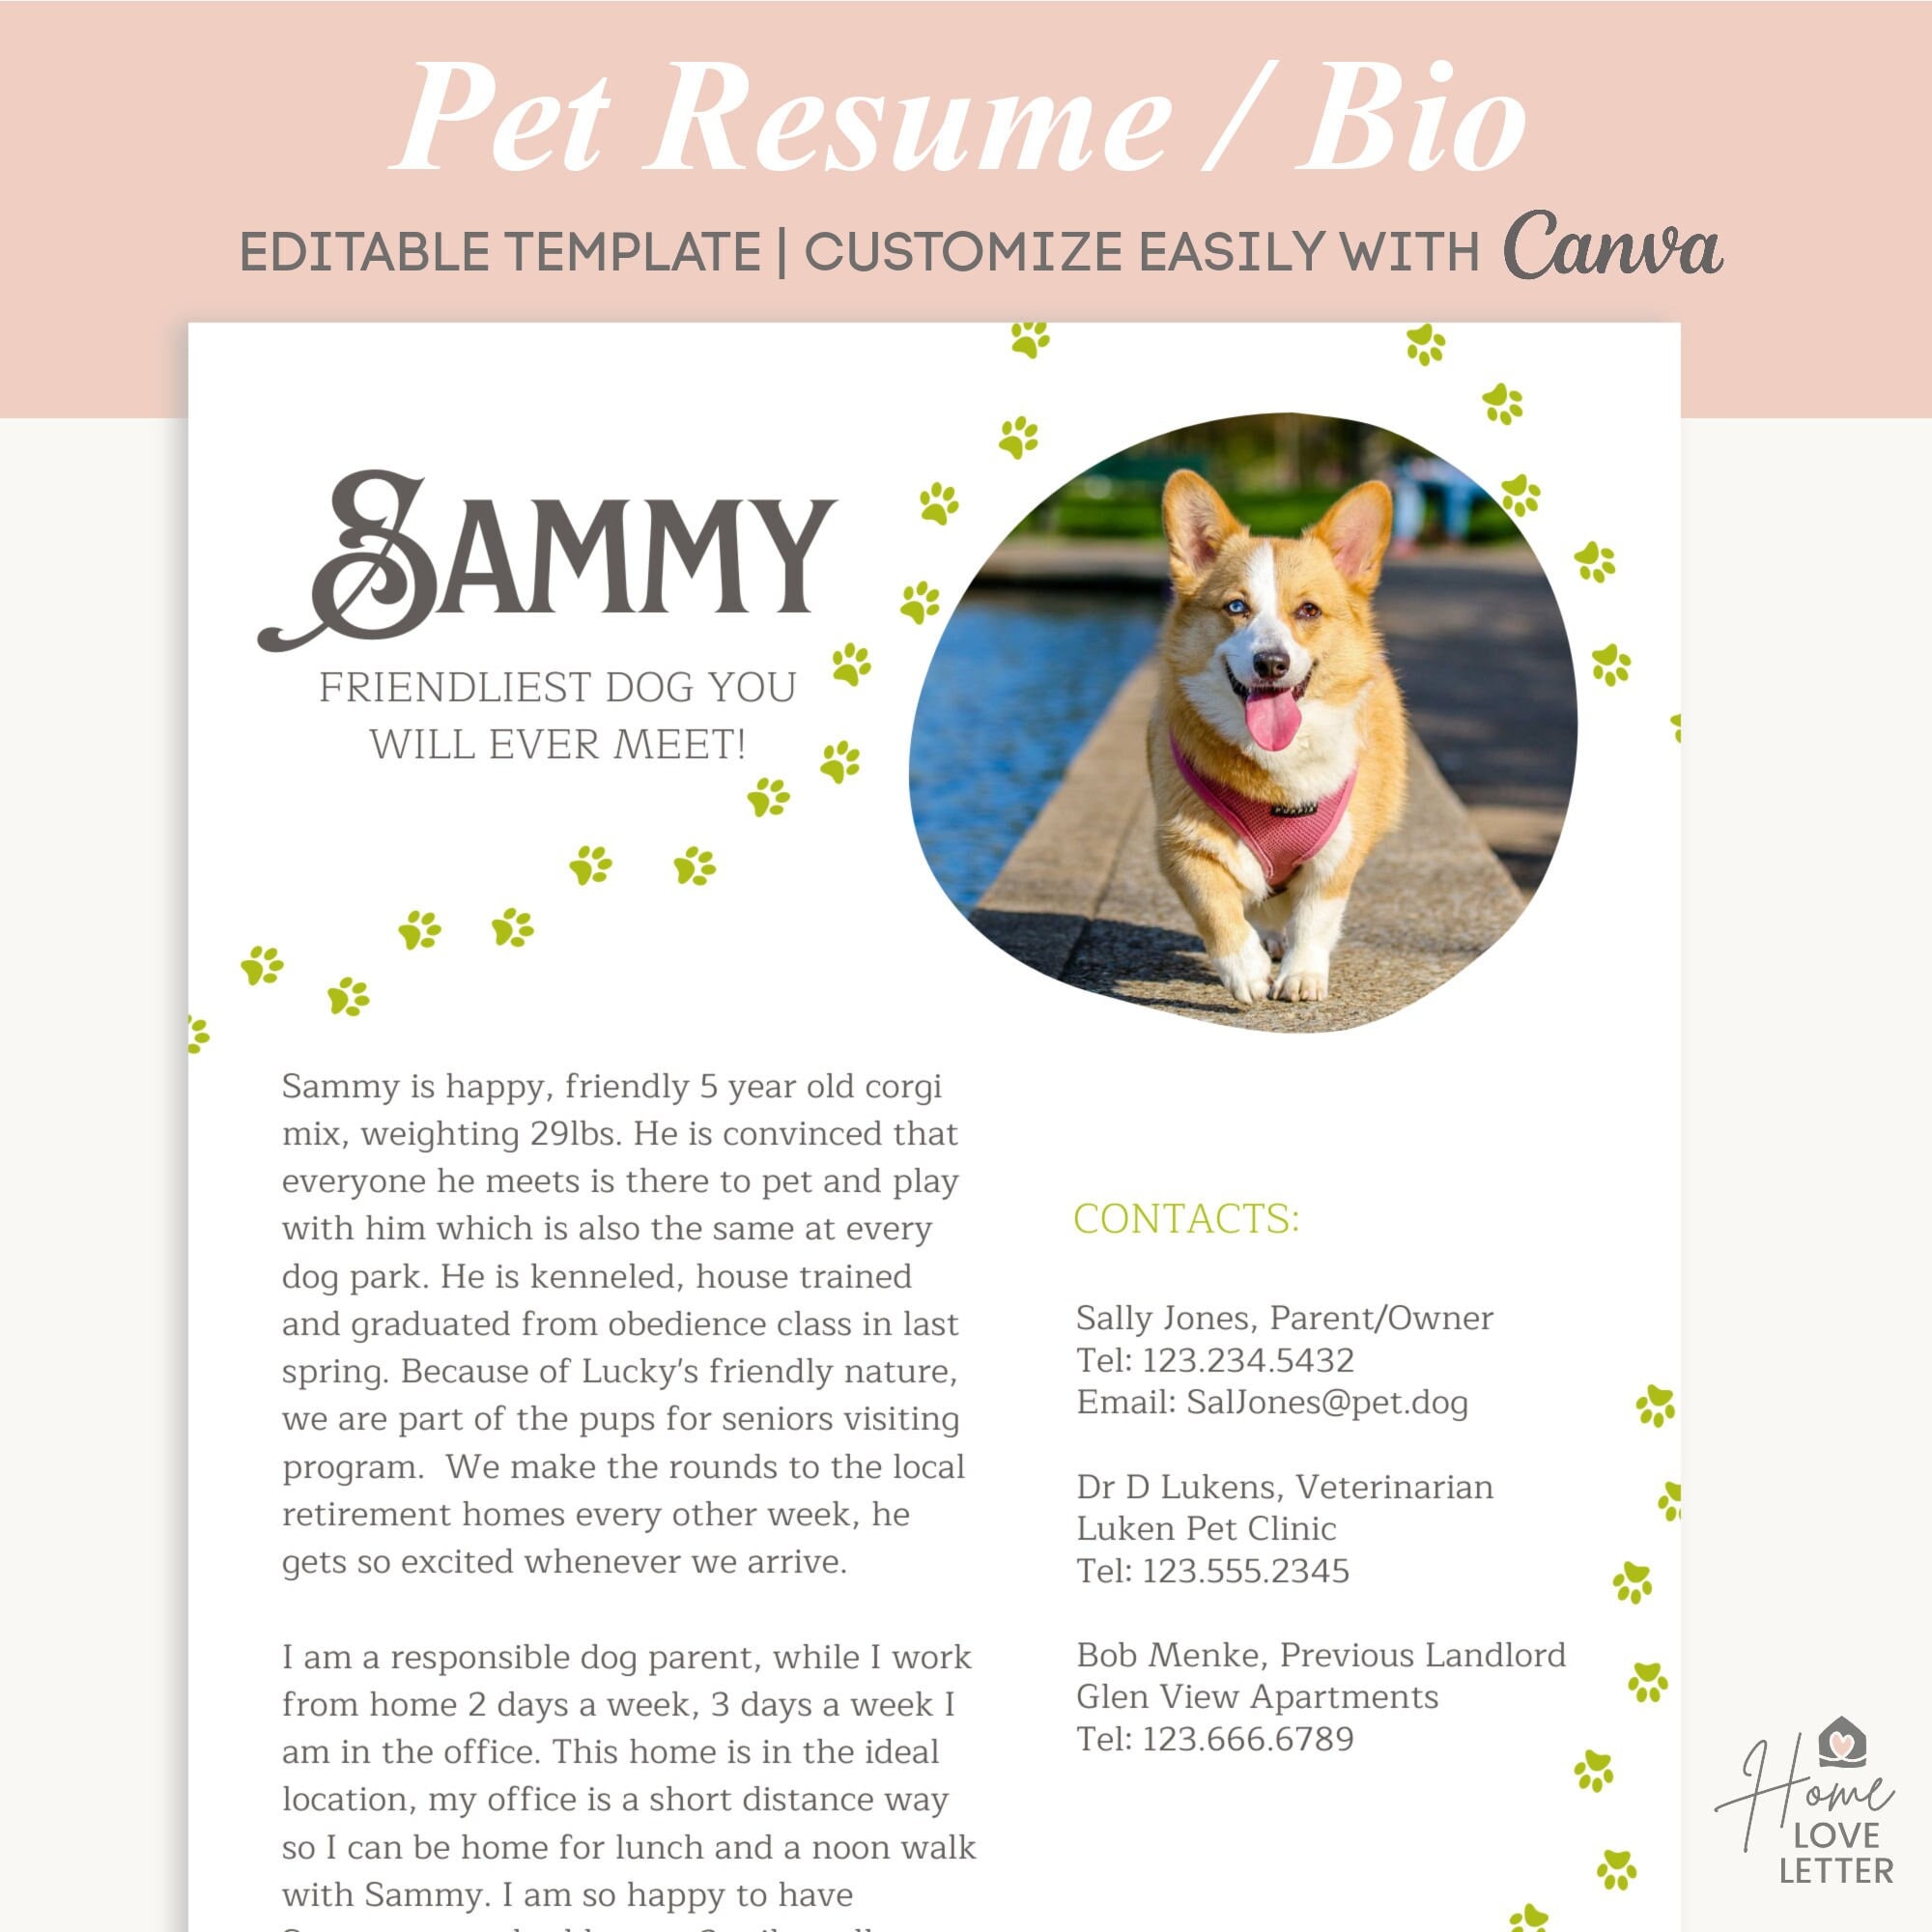 Pet Resume Rental Application Dog Bio Page About My Pet Pet - Etsy